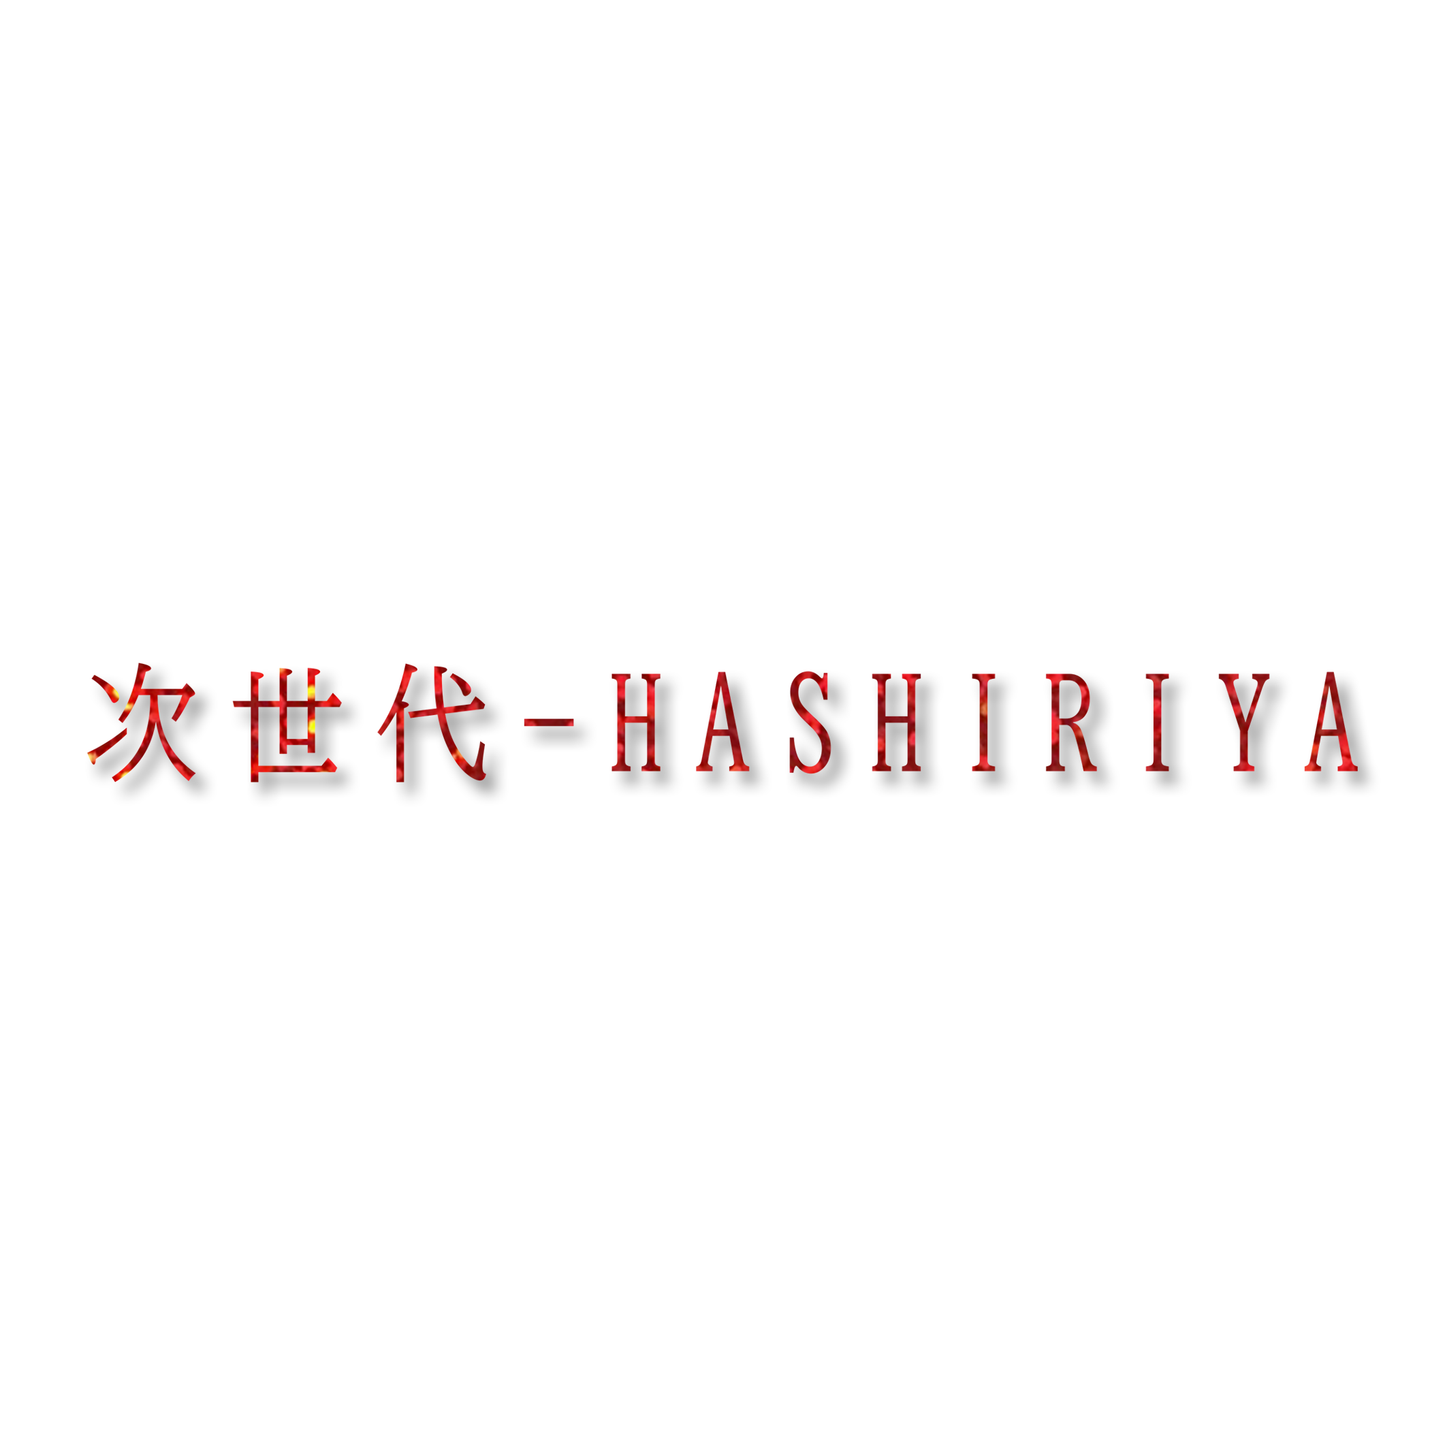 [𝙎𝙊𝙇𝘿 𝙊𝙐𝙏] 'NEW-HASHIRIYA' Red Glitter Sticker